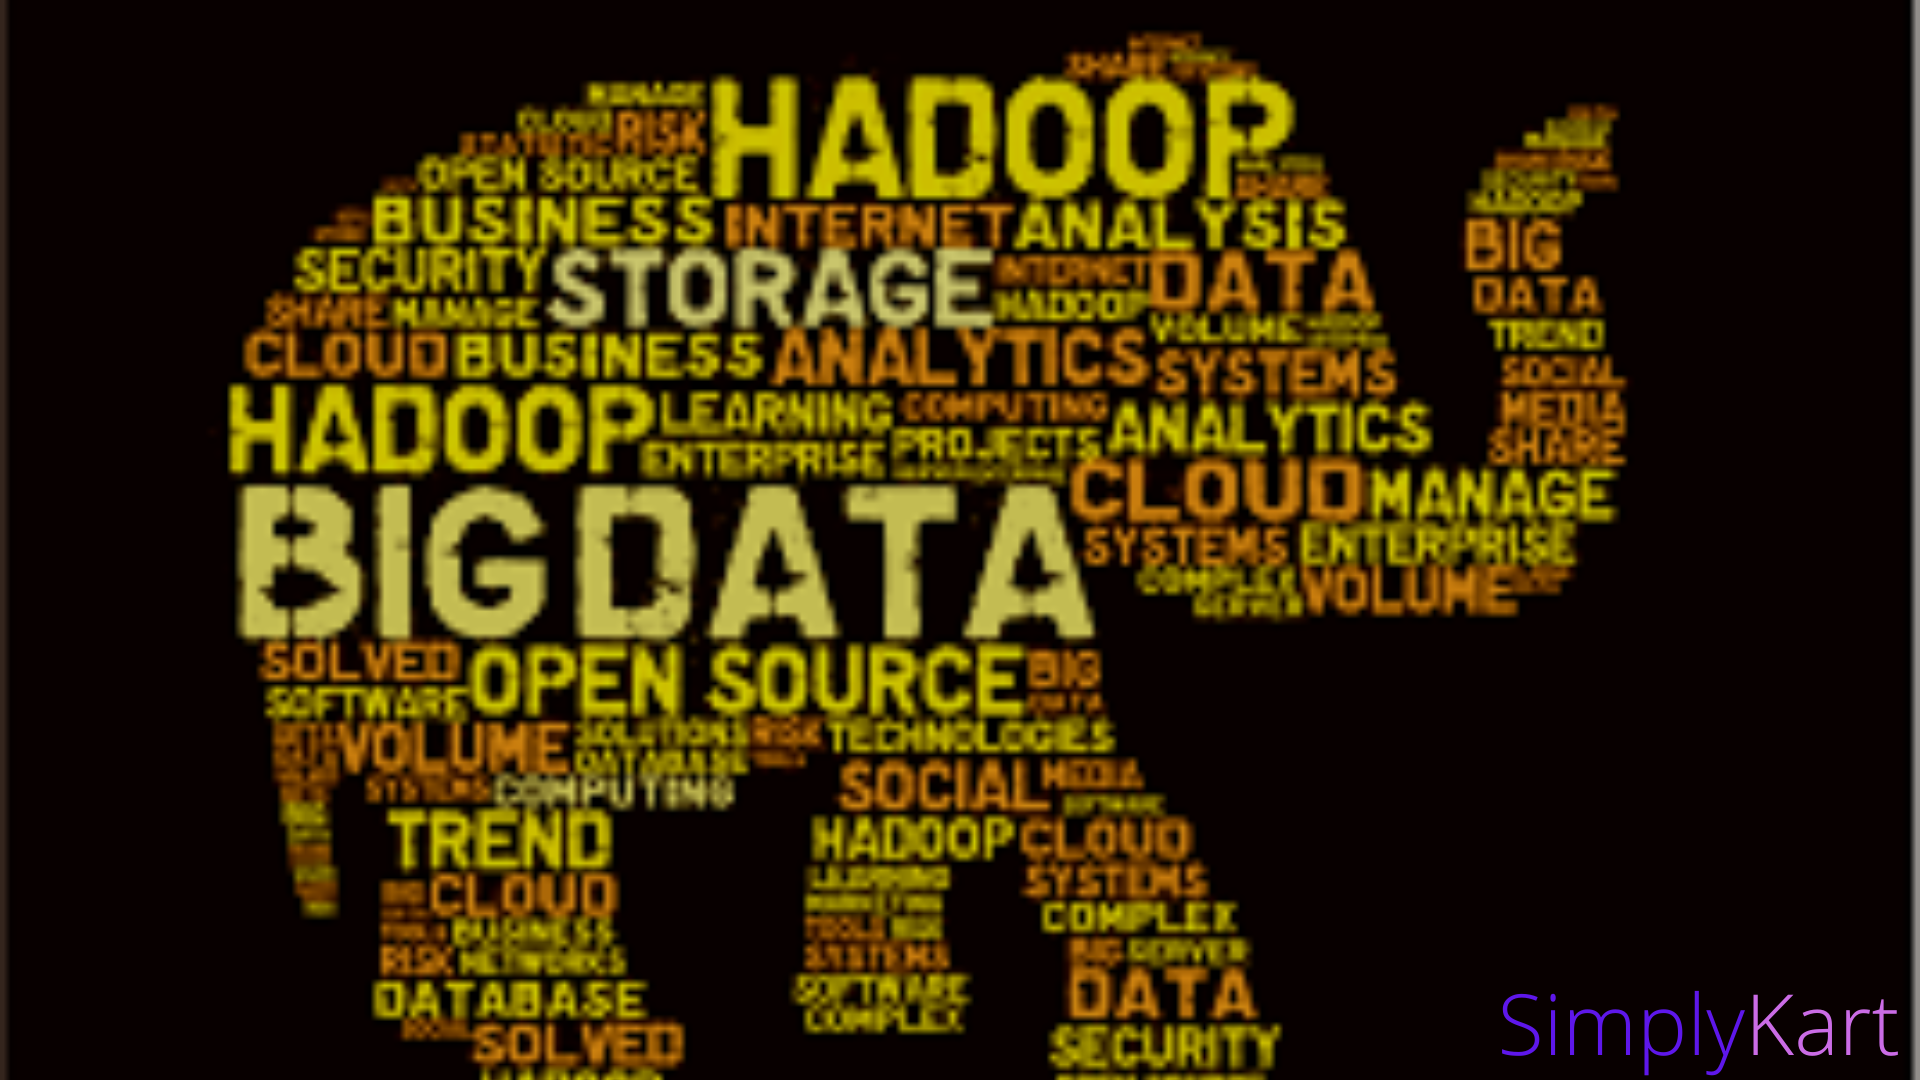 big data and hadoops